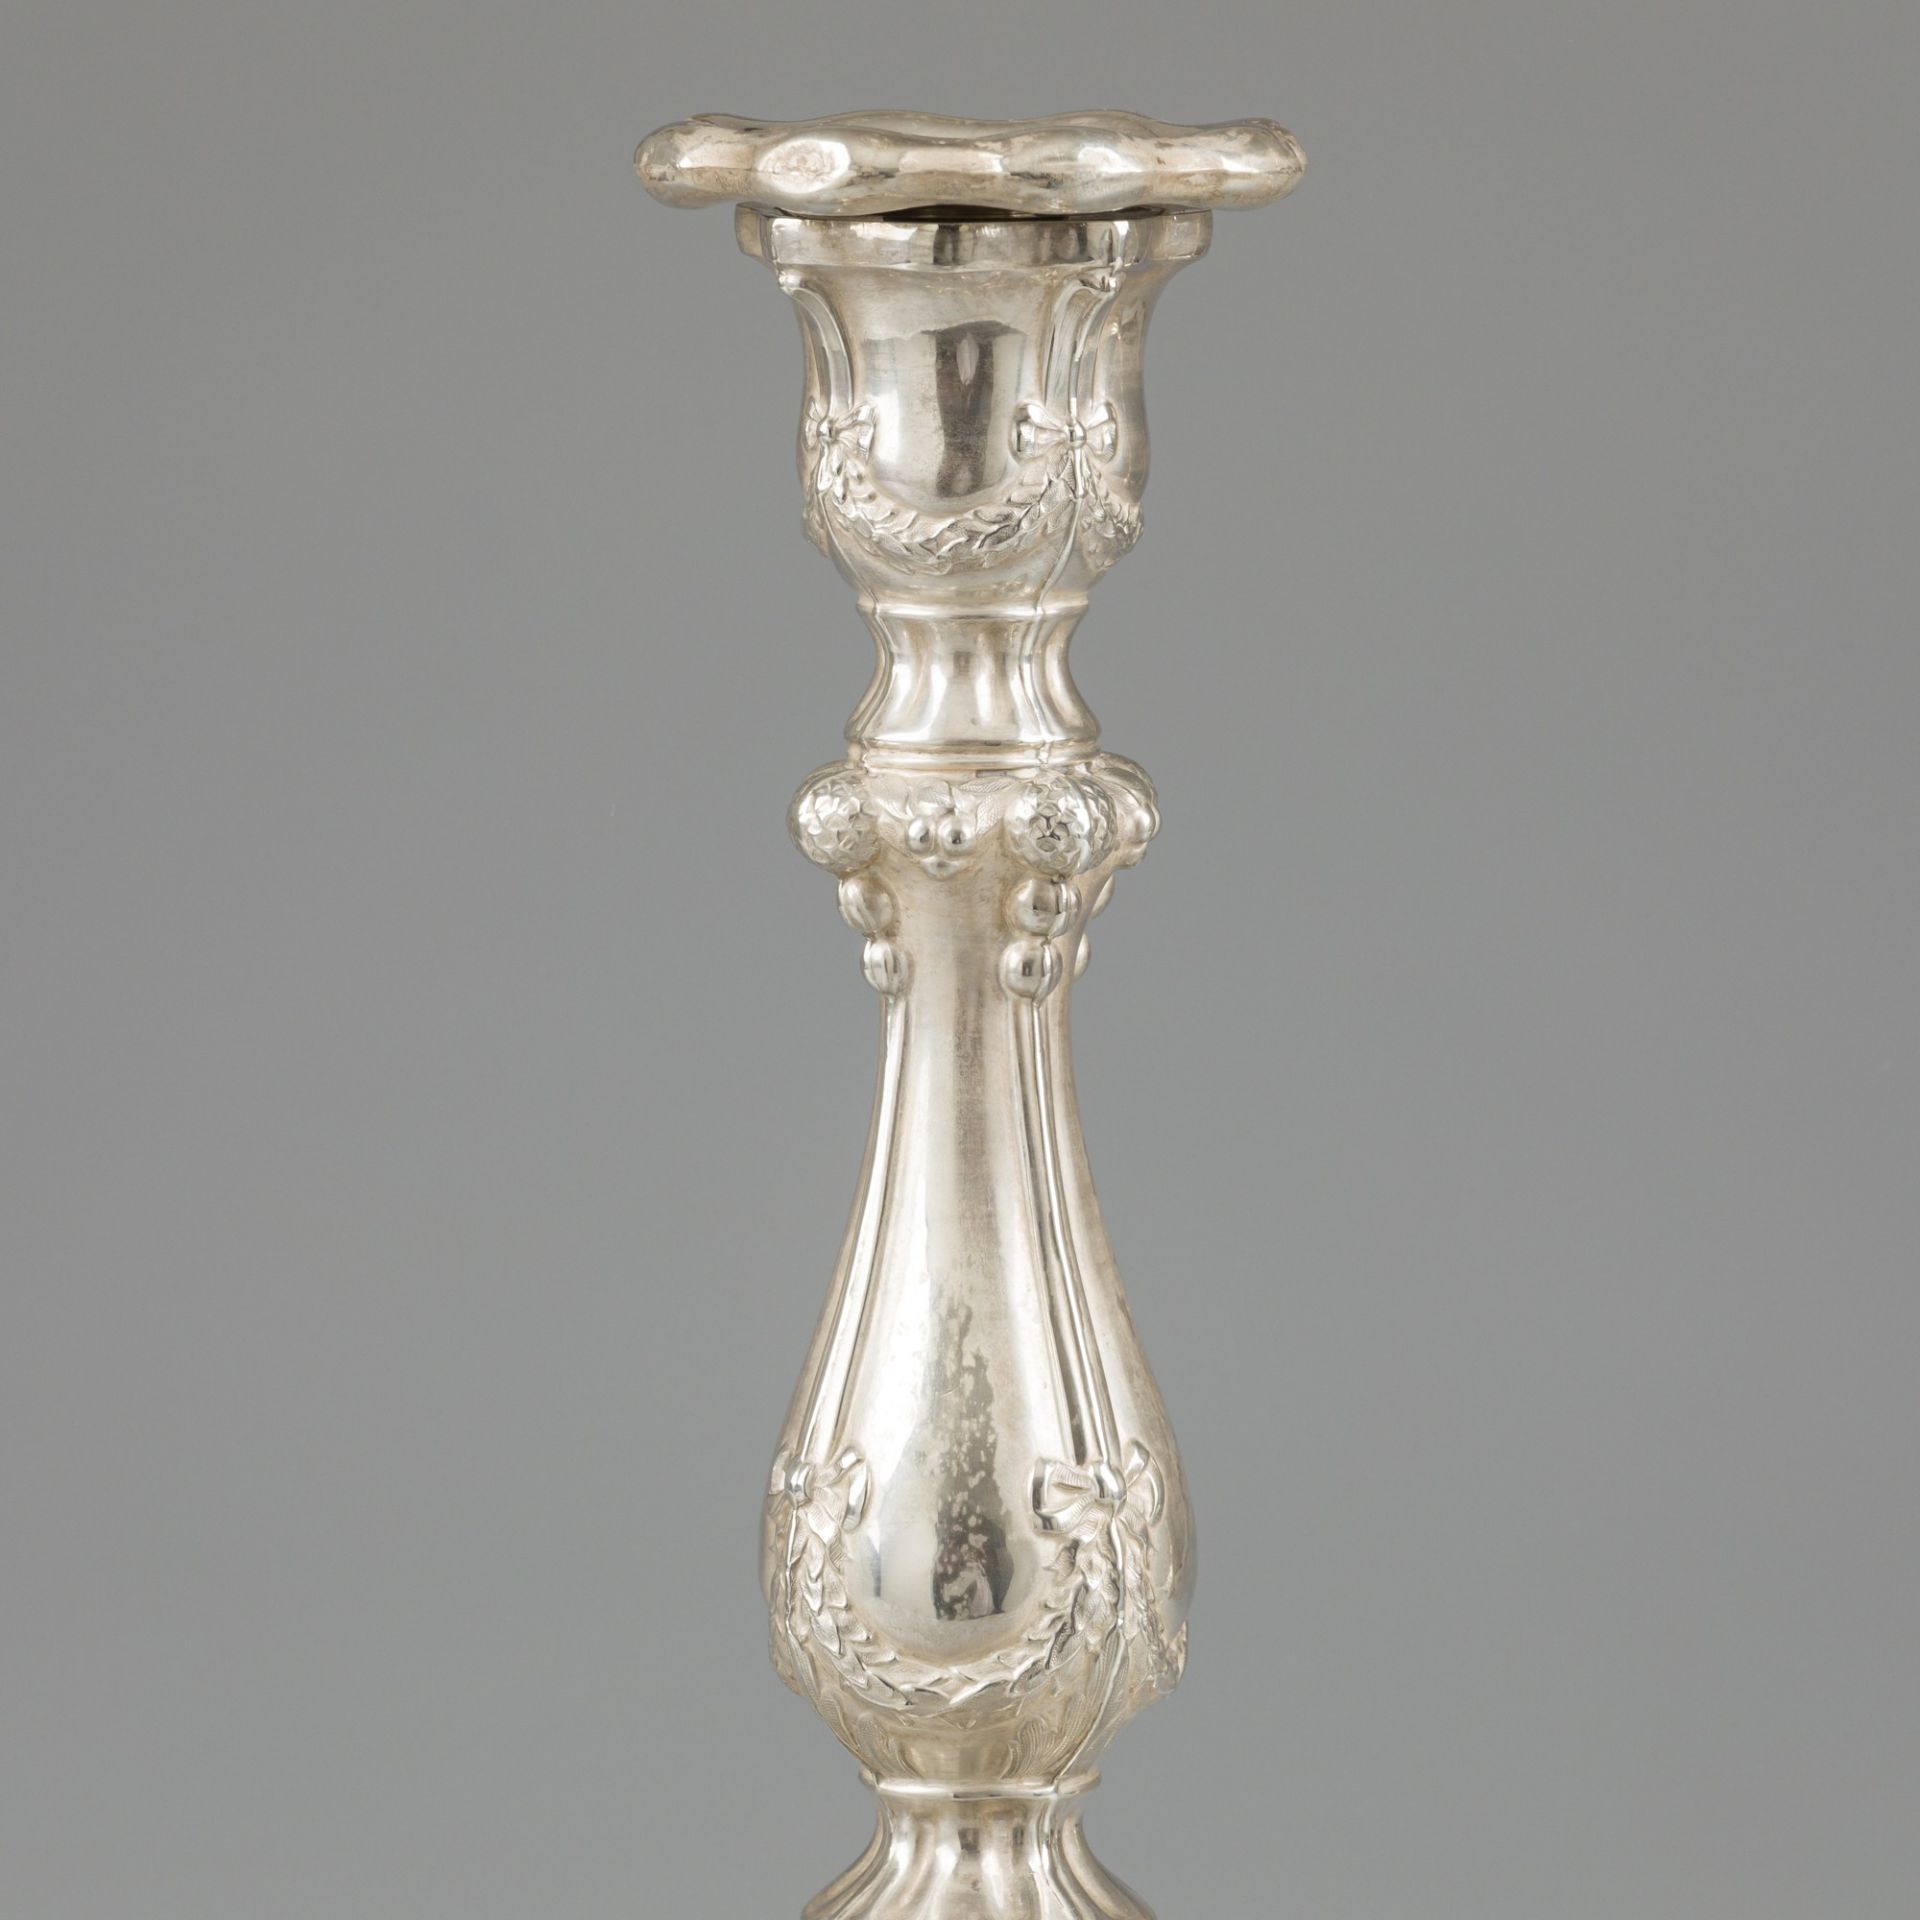 2-piece set of candlesticks (Kiev, ca. 1880-85), silver. - Image 4 of 6